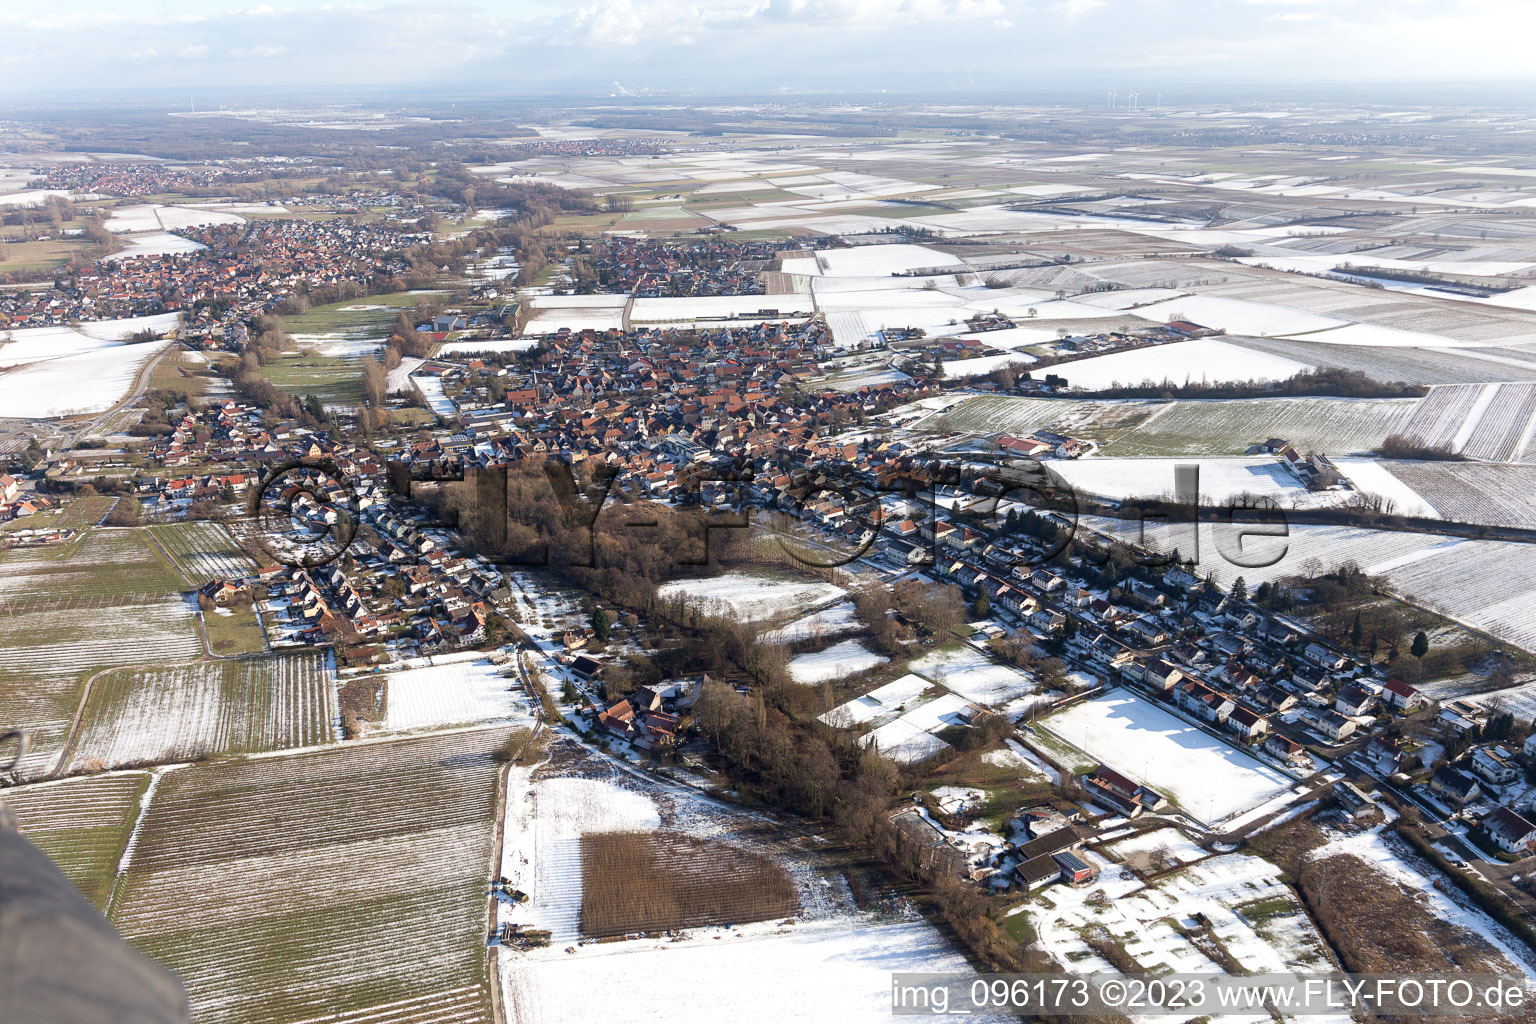 Quartier Ingenheim in Billigheim-Ingenheim dans le département Rhénanie-Palatinat, Allemagne depuis l'avion